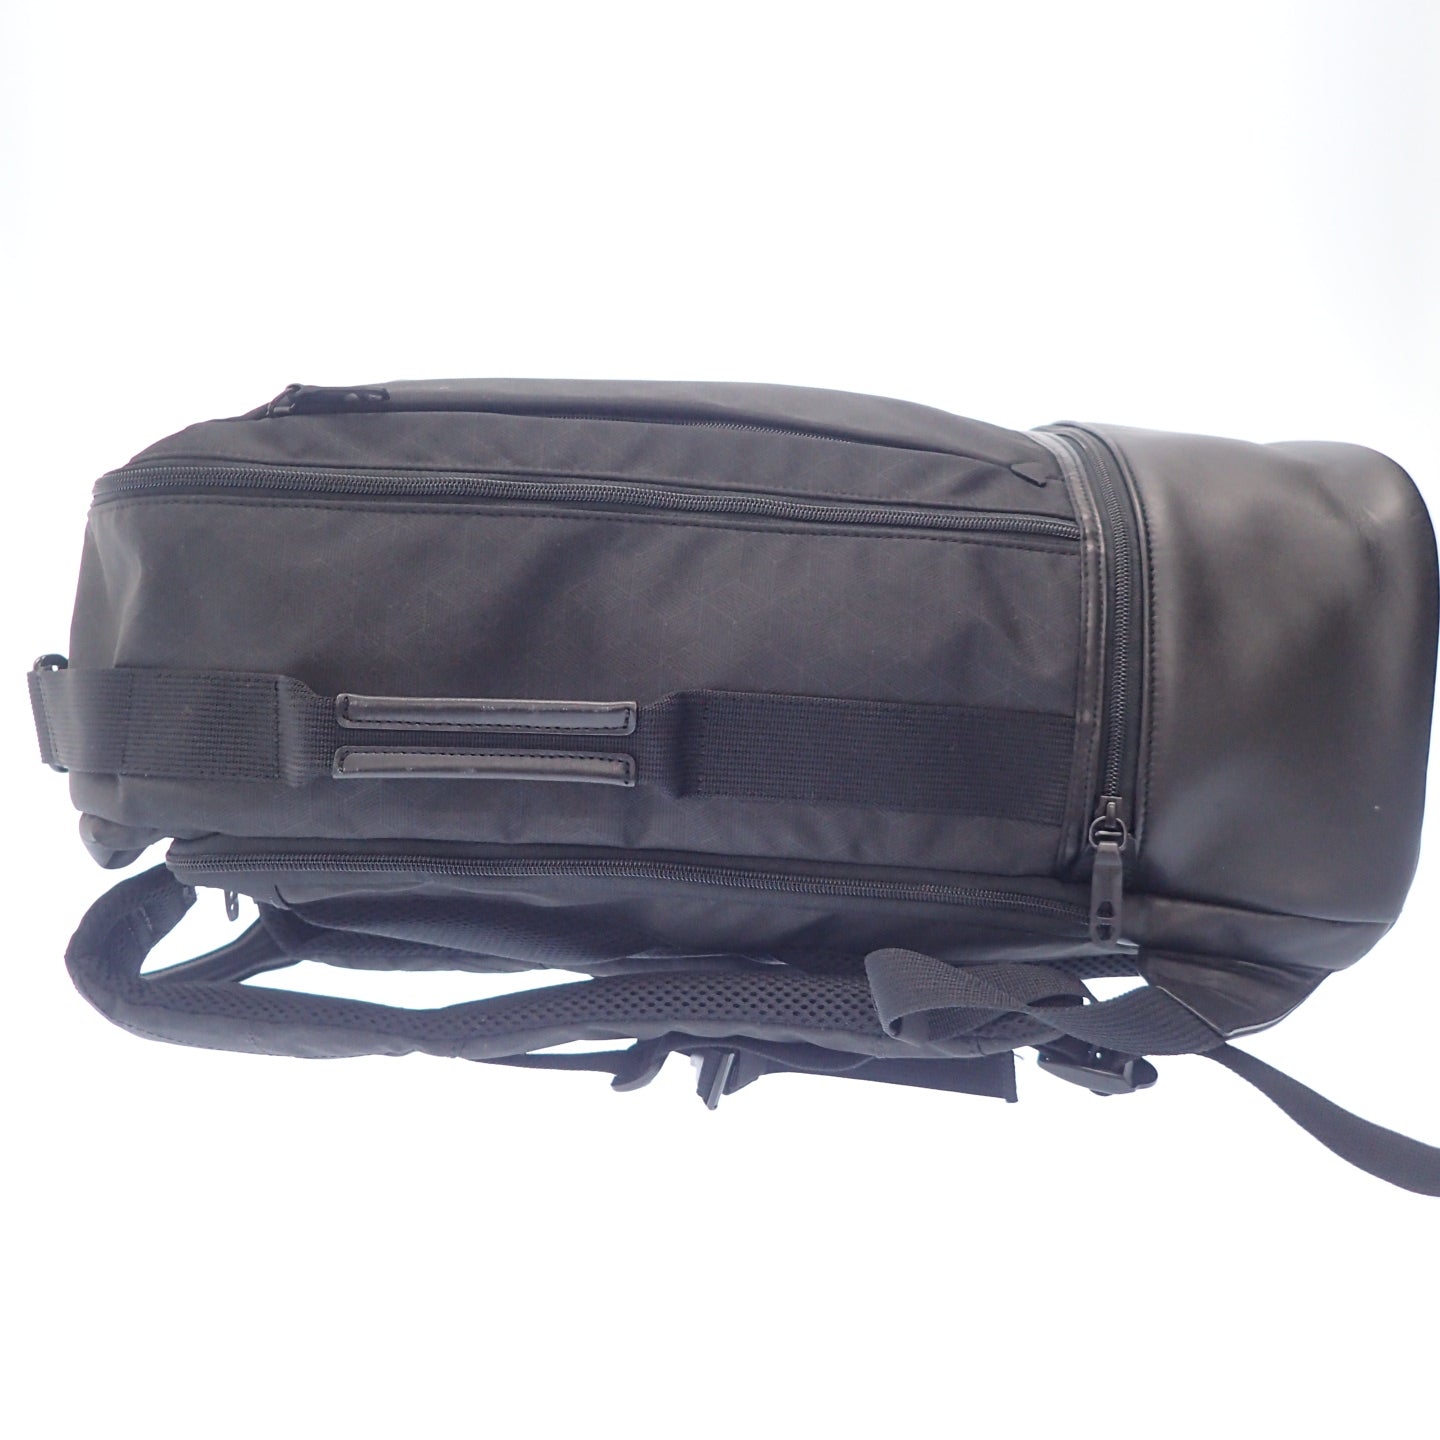 Tumi Bag Pack 2Way Bag TAHOE 798645D TUMI [AFE8] [Used] 